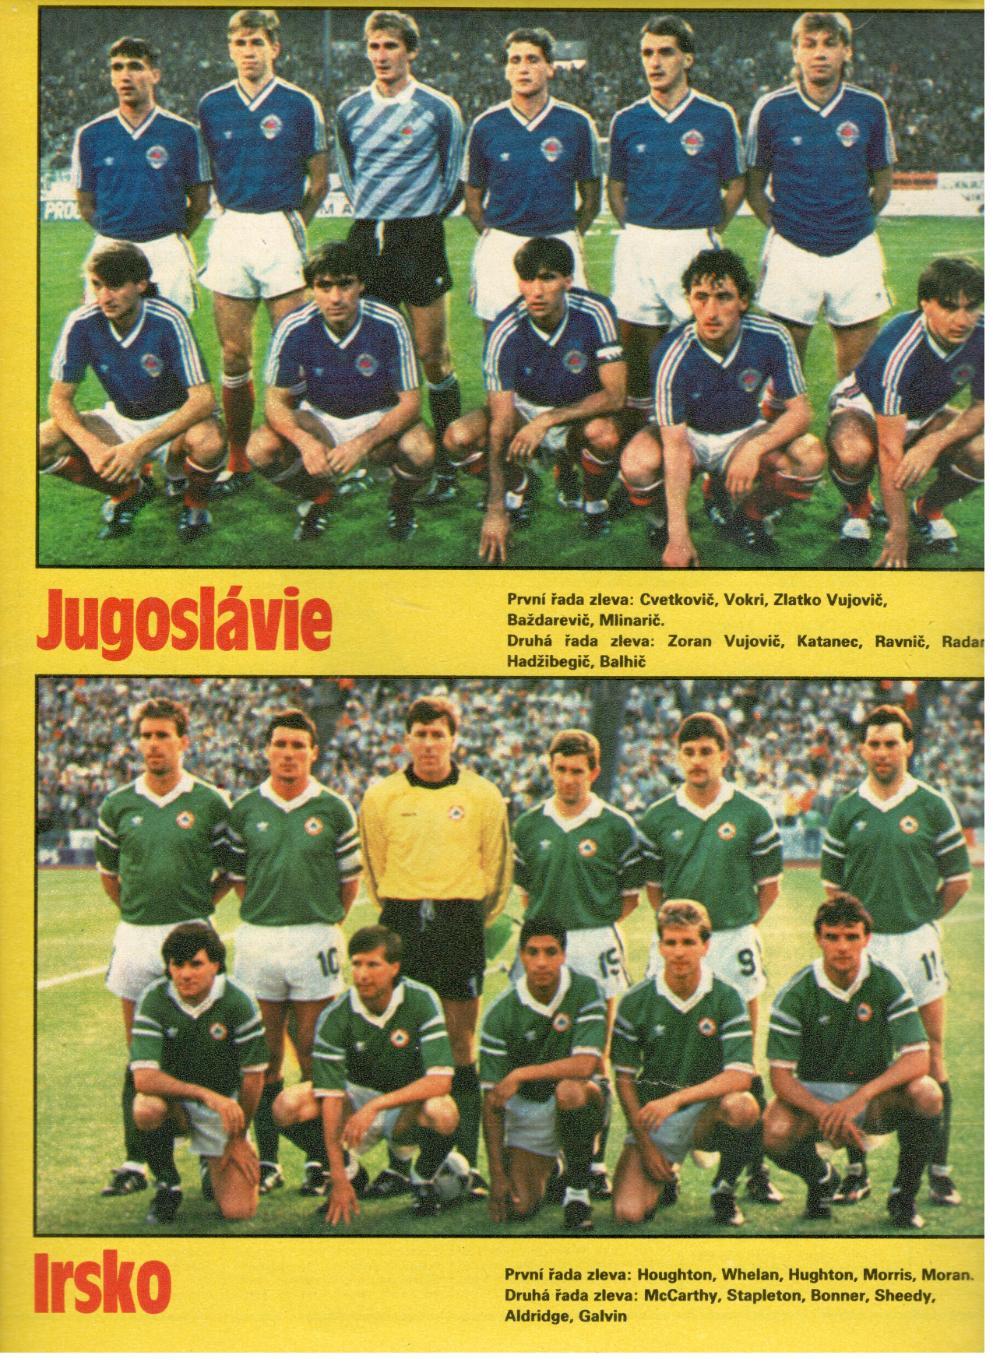 Участники чемпионата мира 1990. Югославия, Ирландия